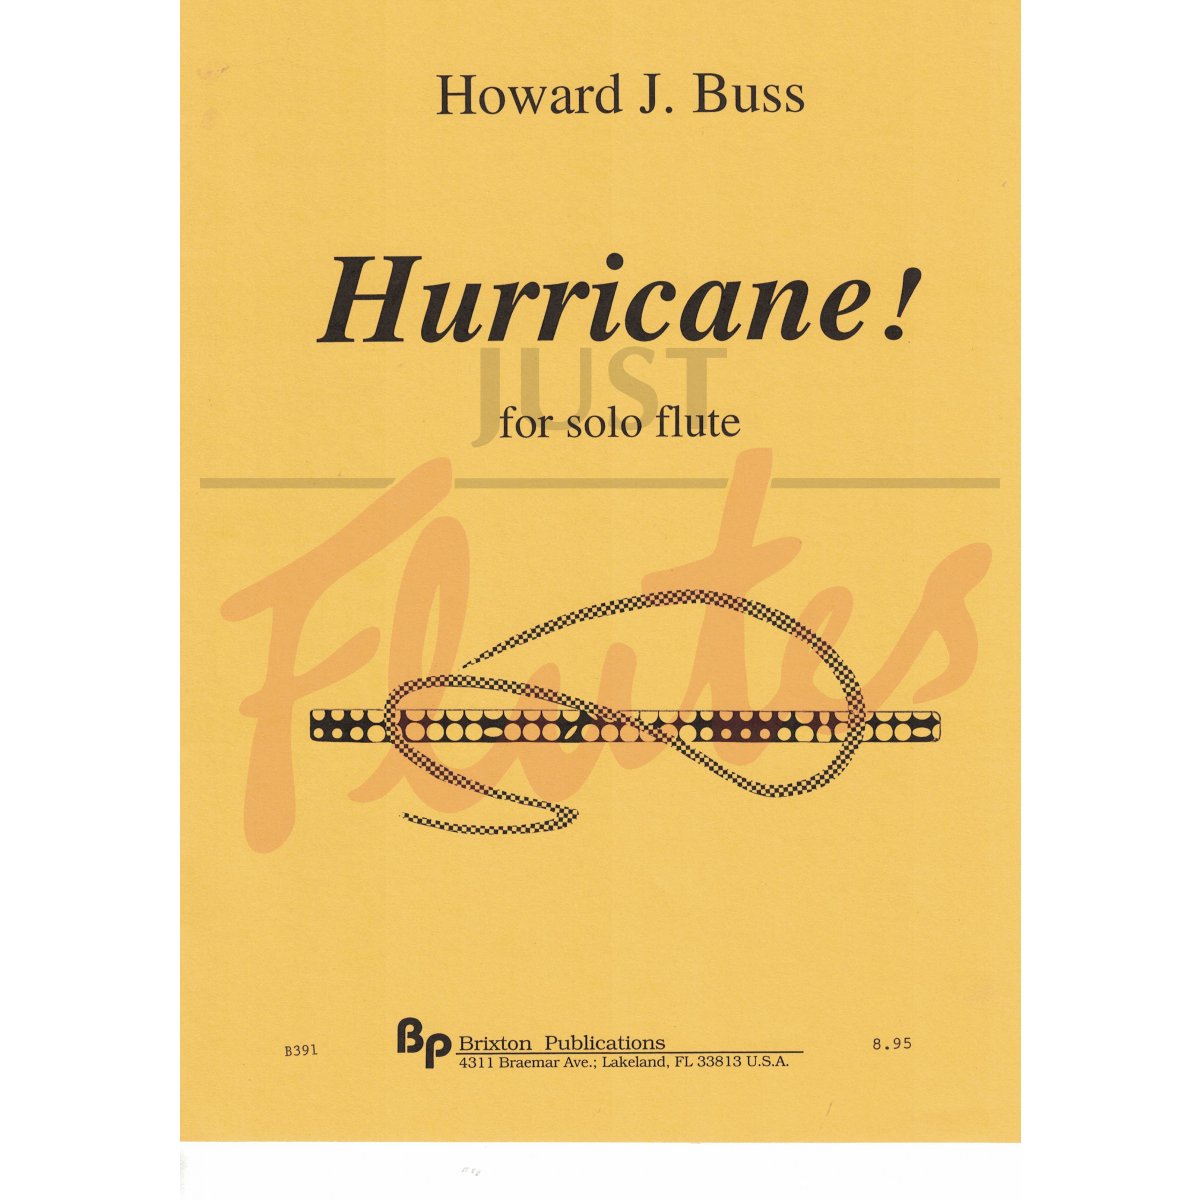 Hurricane! for solo flute